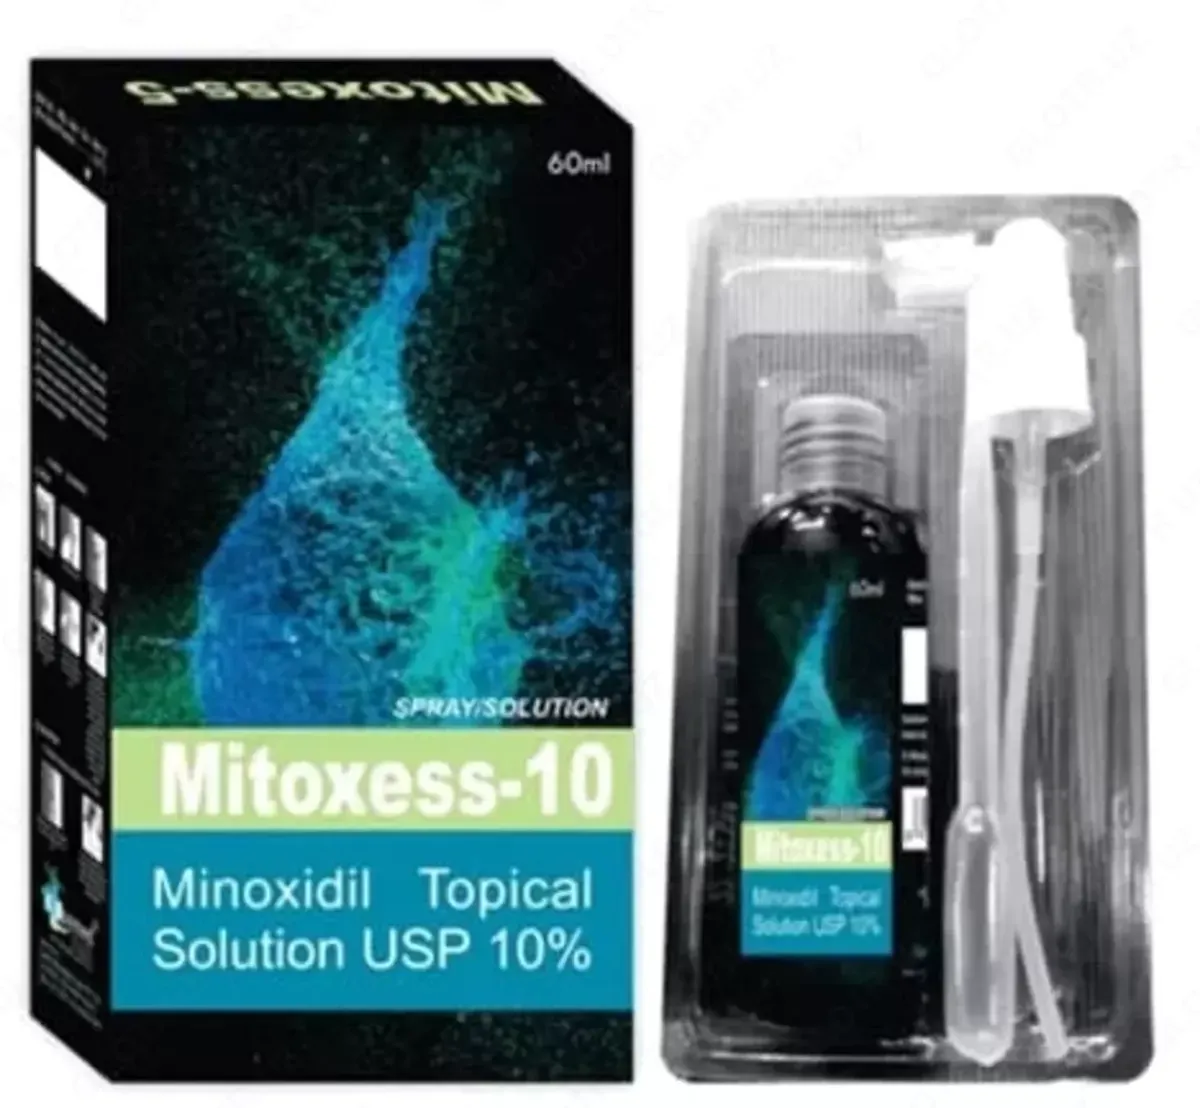 Спрей сыворотка 'Mitoxess' Minoxidil 10% (60мл)#1